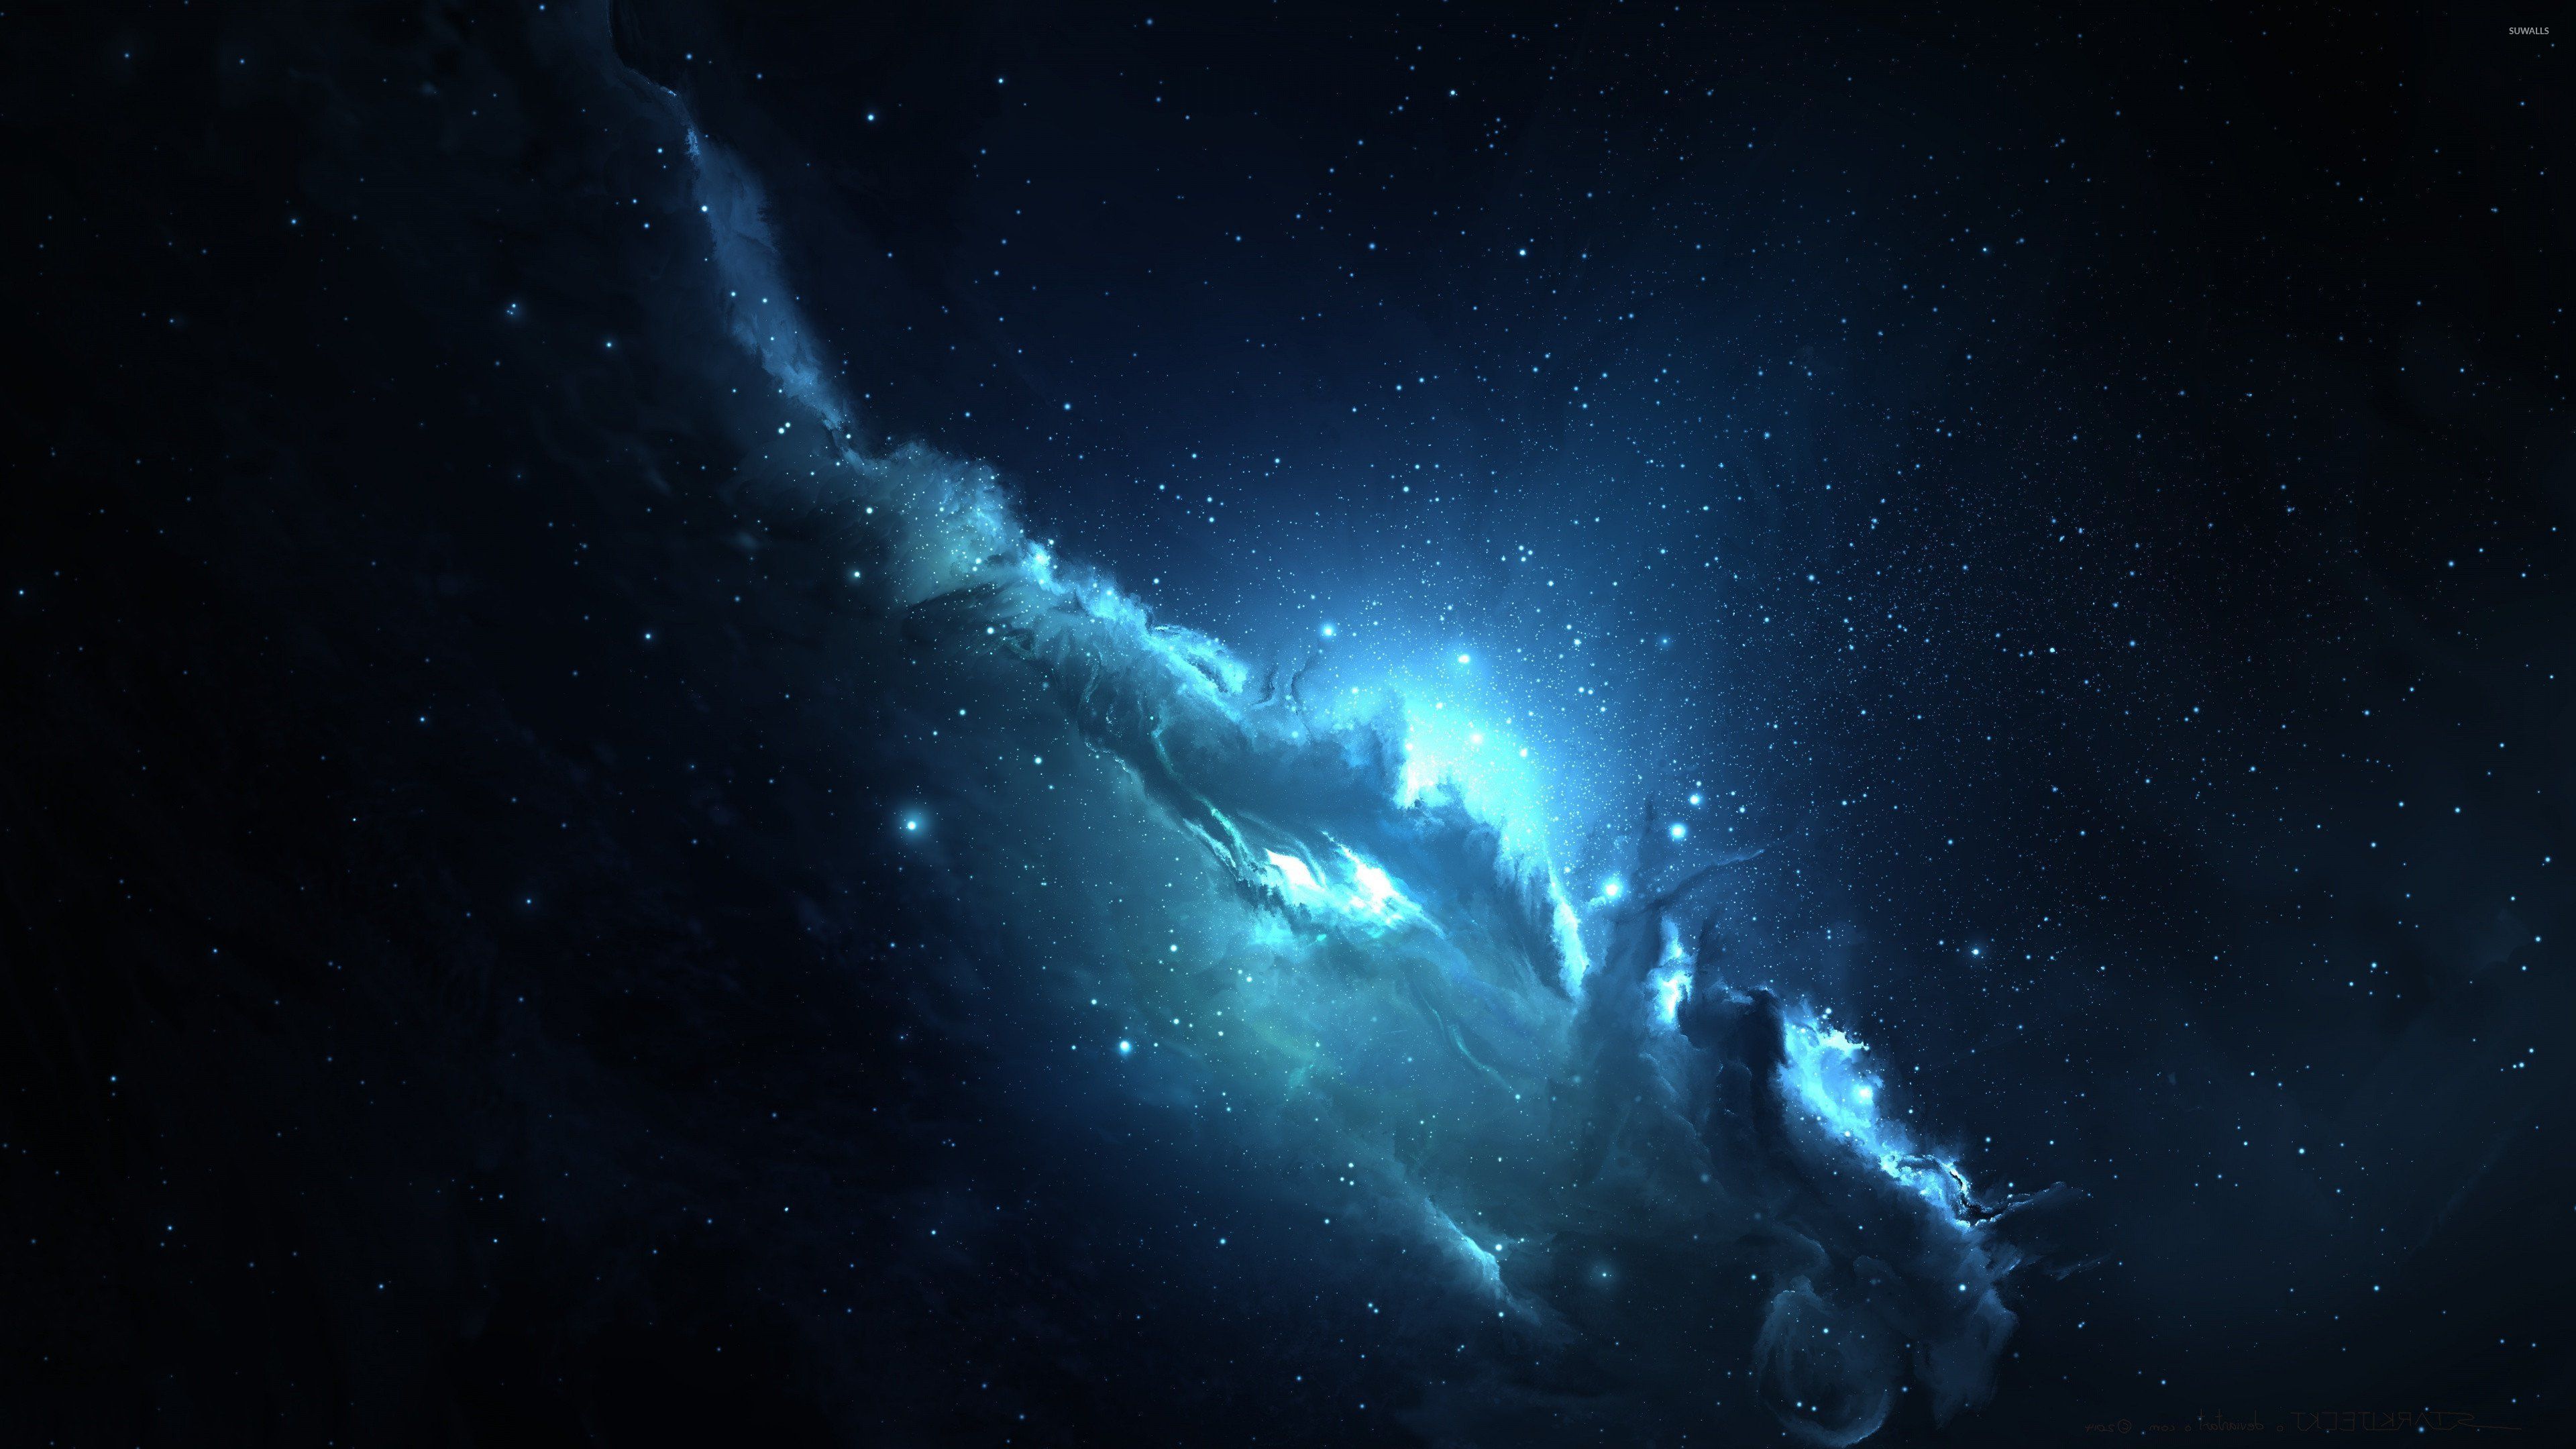 Blue nebula [3] wallpaper - Space wallpapers - #46192